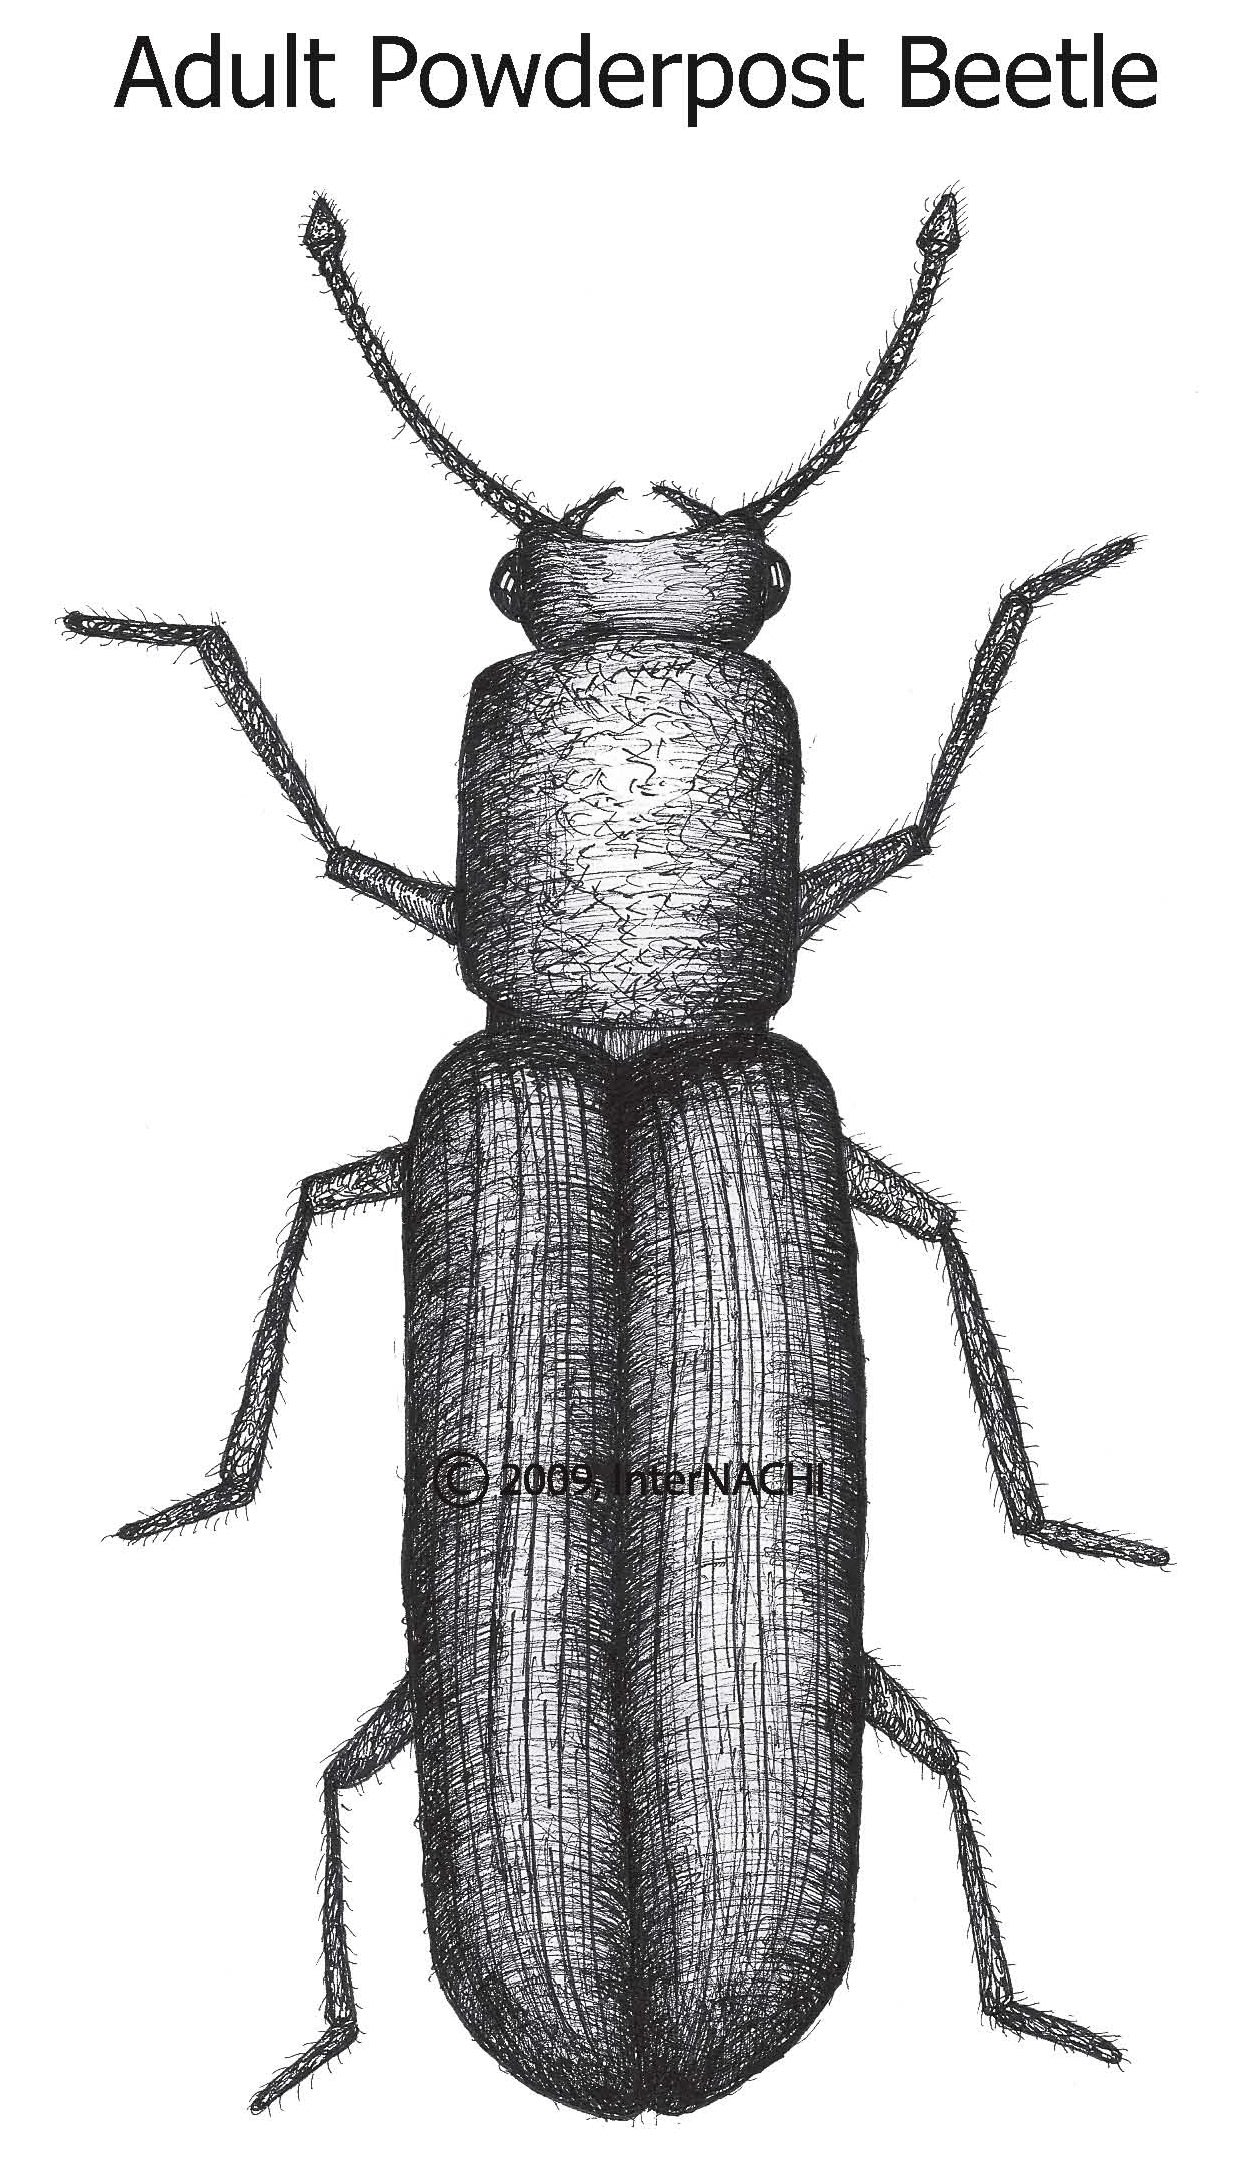 Adult powderpost beetle.